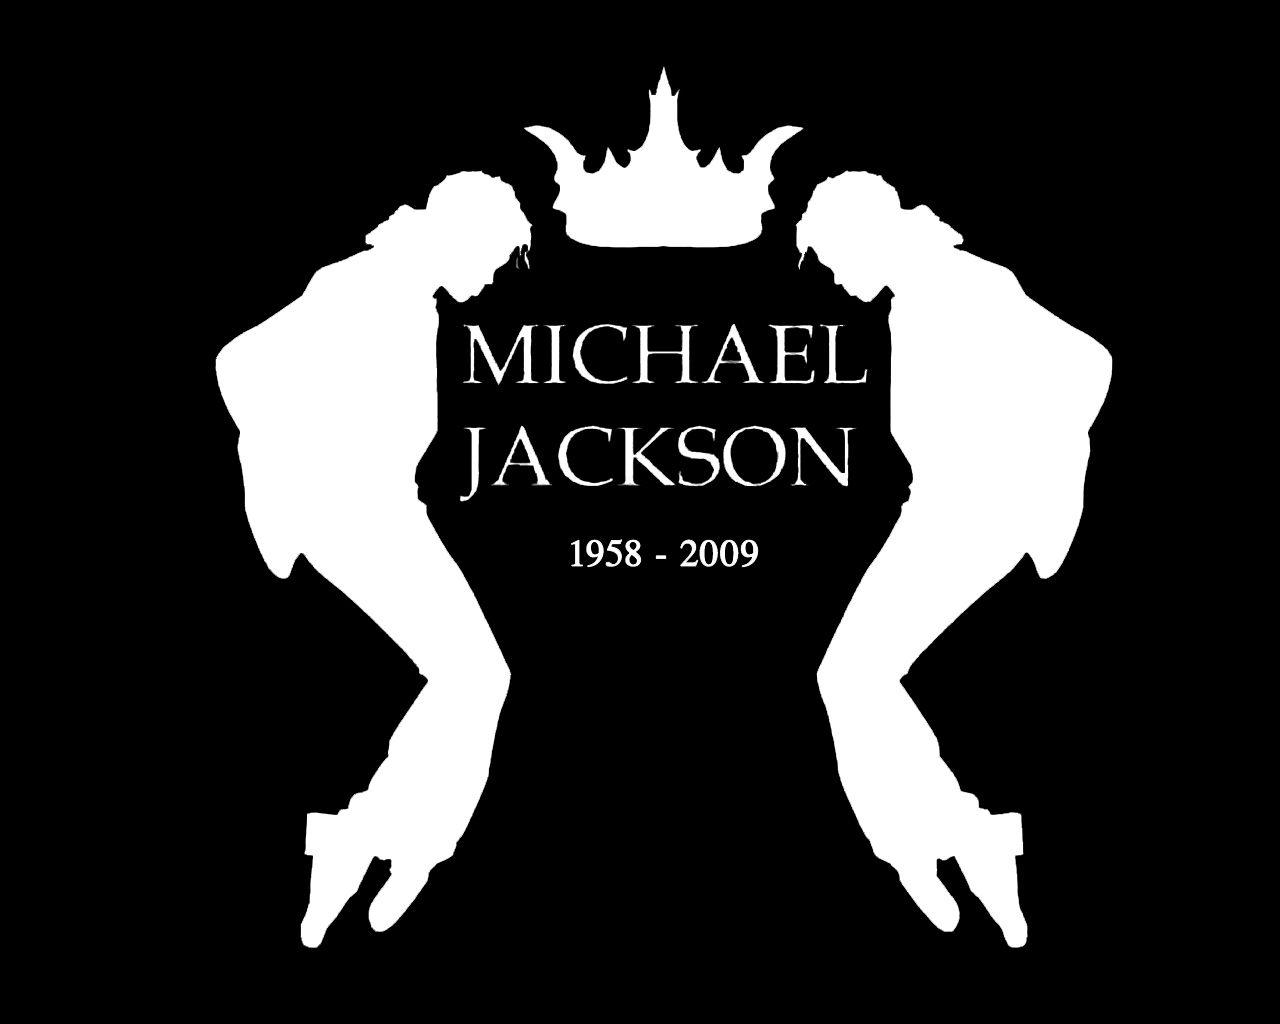 Michael Jackson PNG Image - PurePNG | Free transparent CC0 PNG Image Library